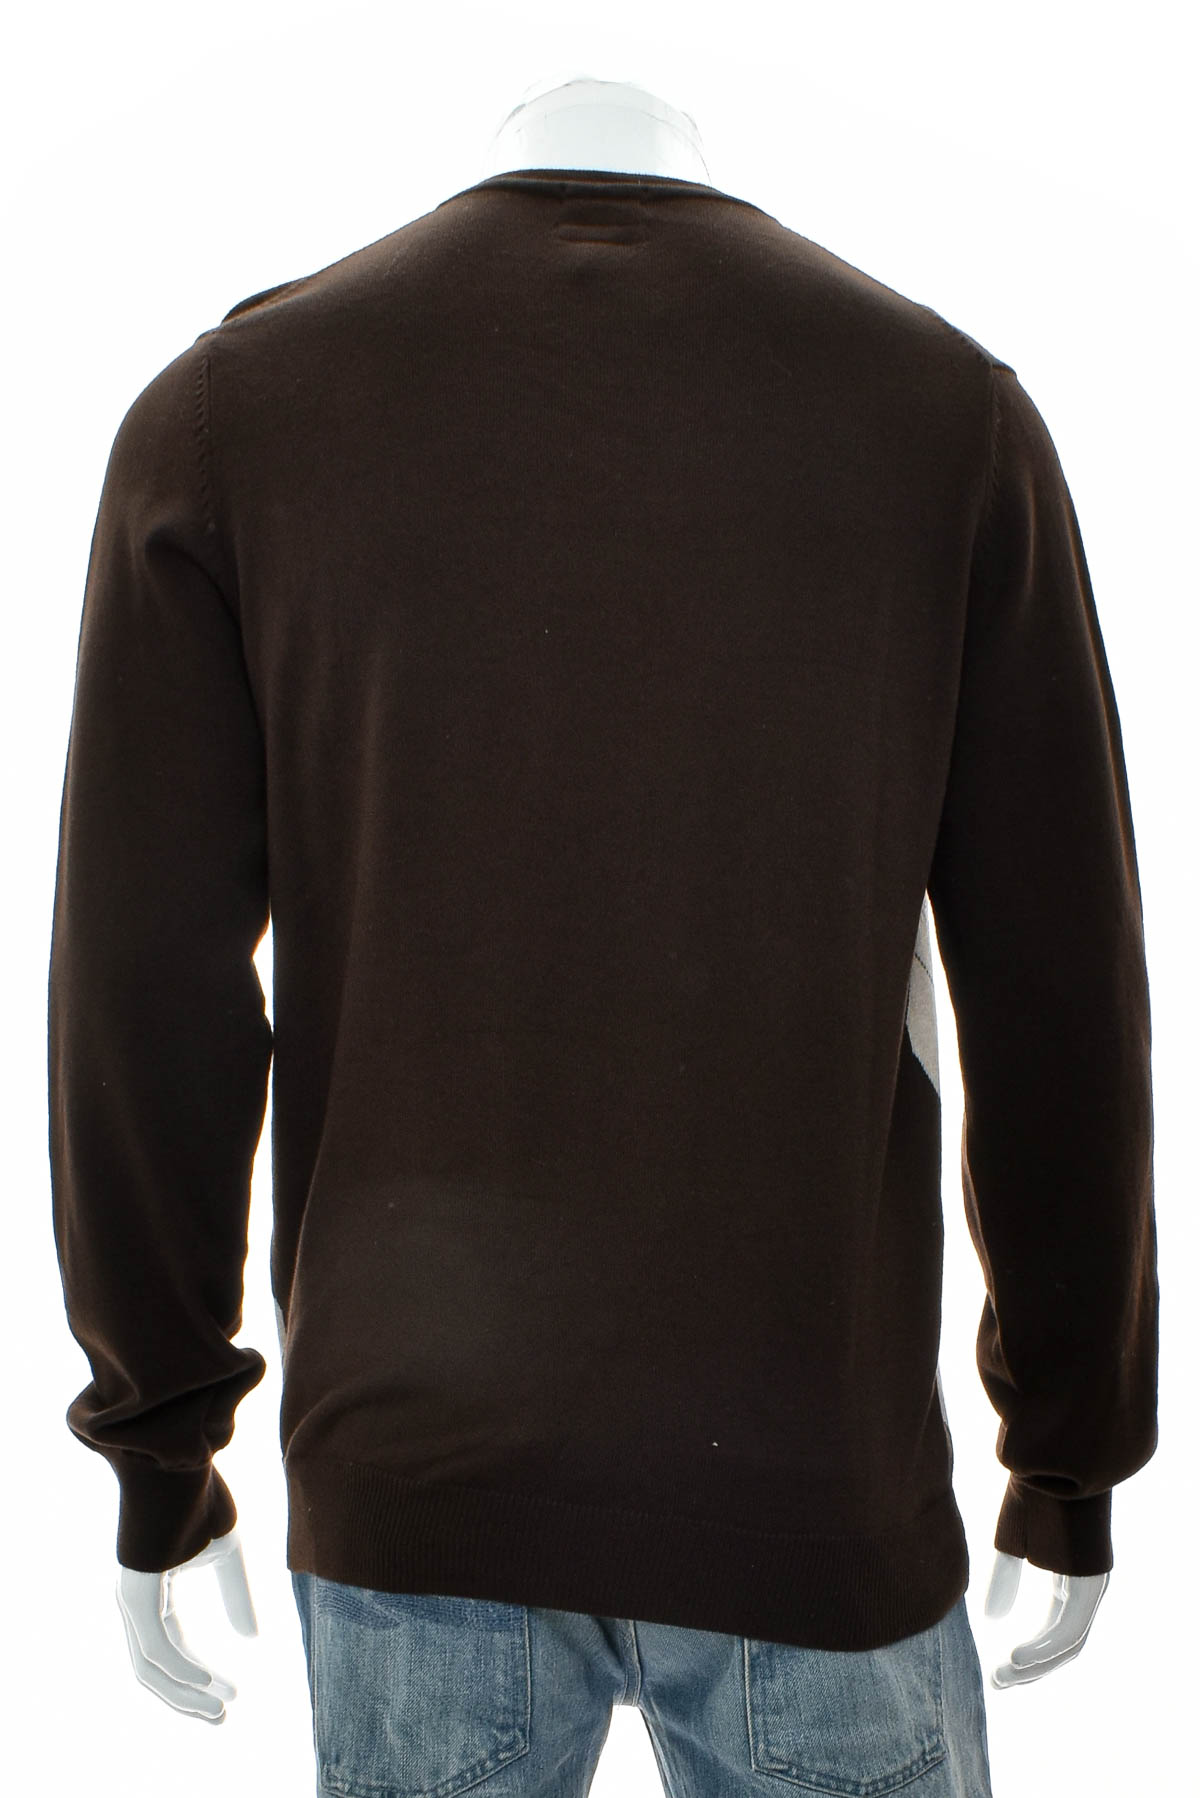 Men's sweater - STAFFORD - 1